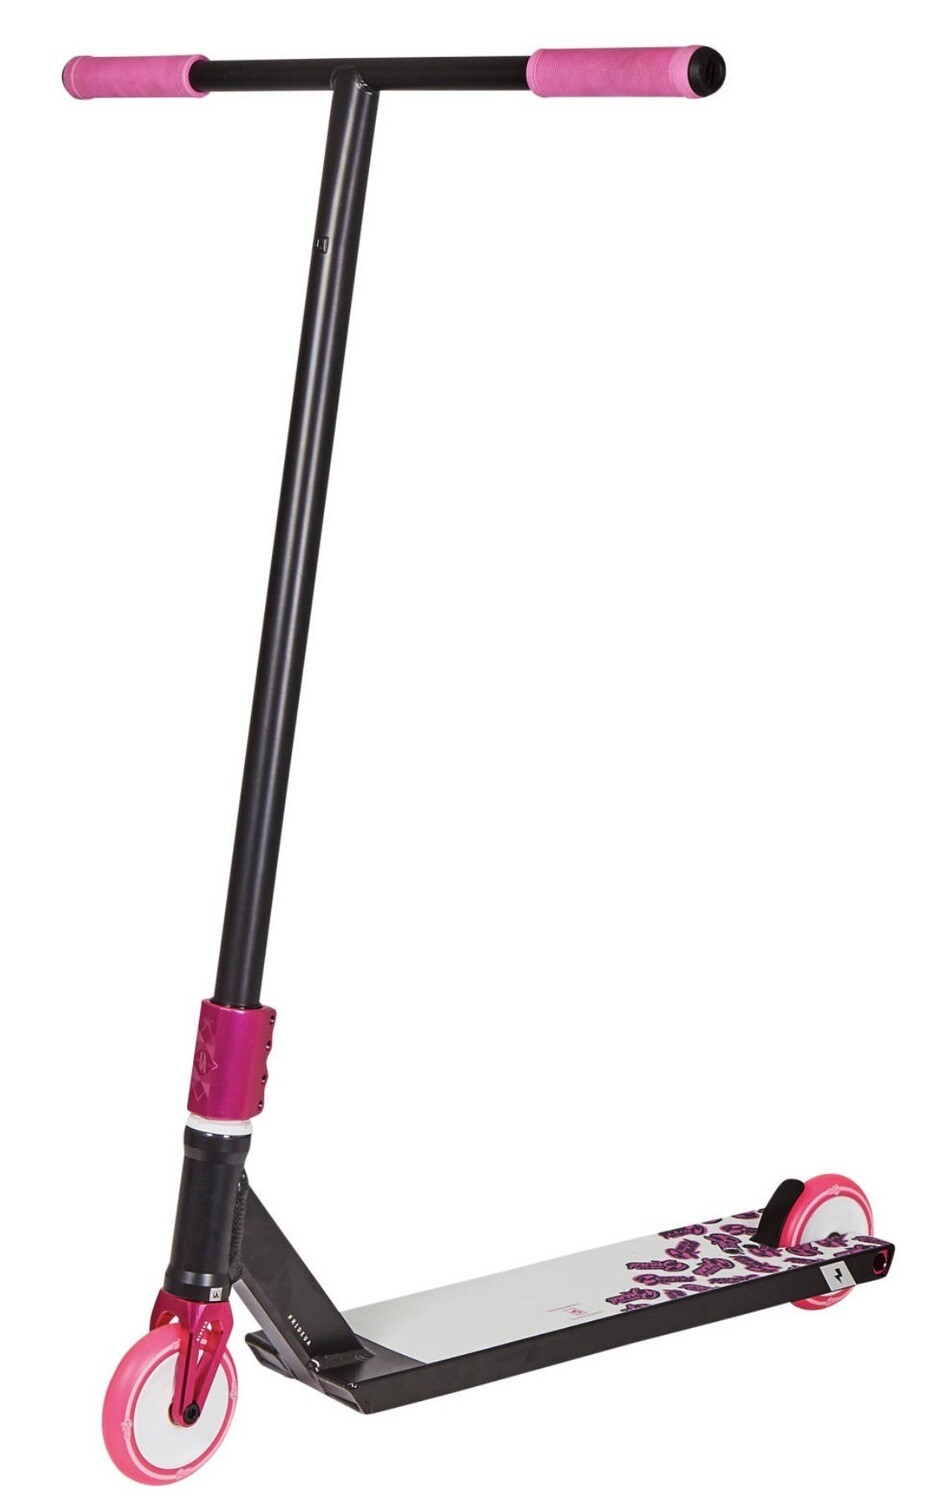 UrbanArtt Bone Pro Scooter
(Color: Pink)